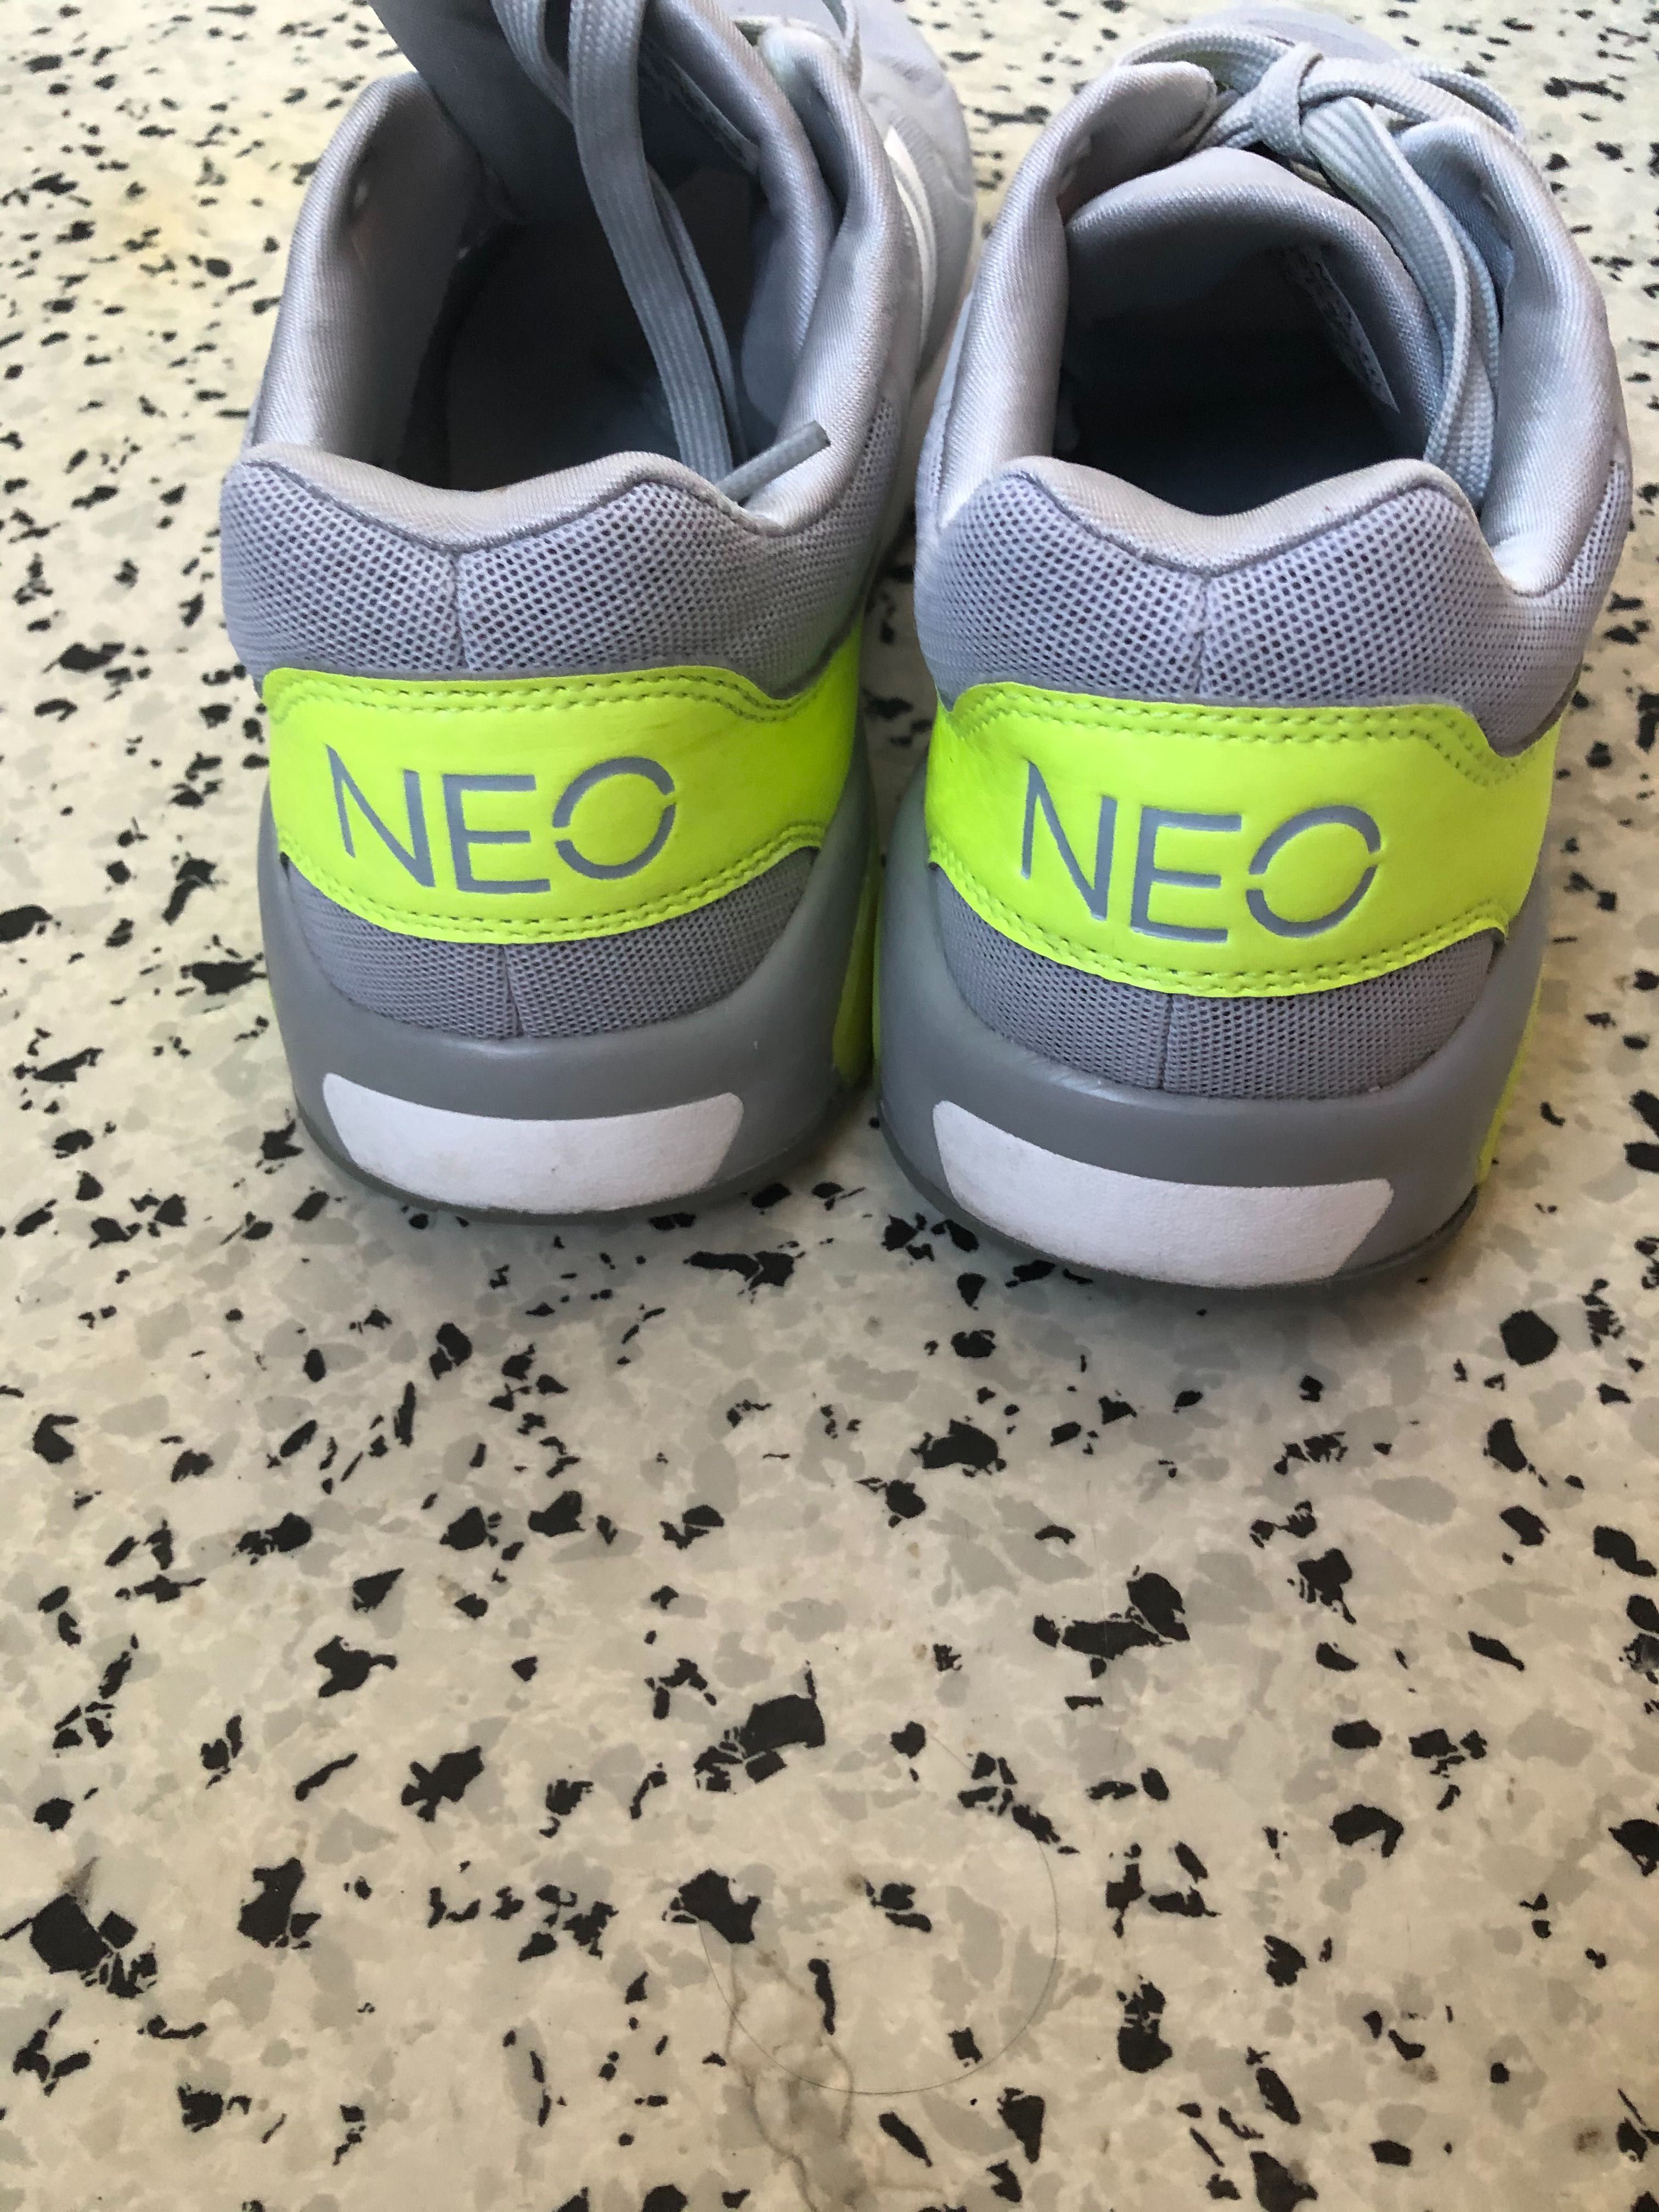 Adidas Neo original